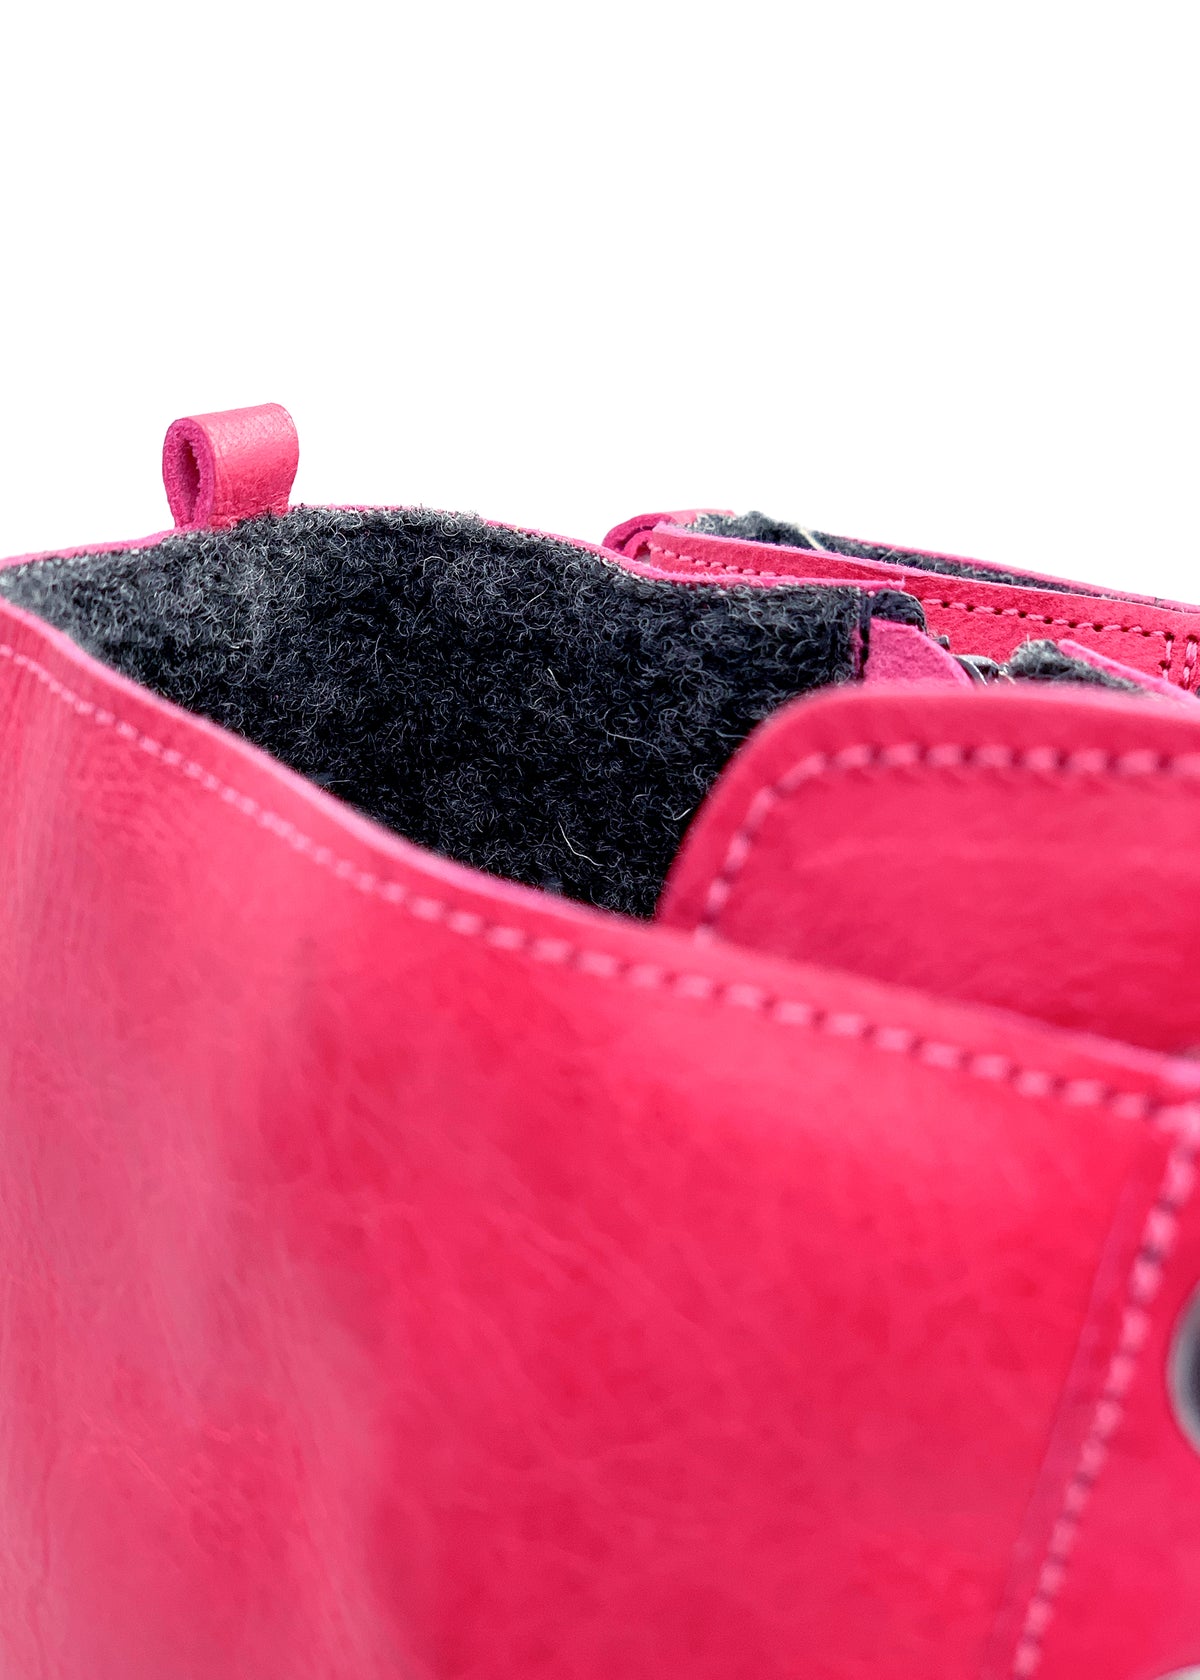 Maihari boots - Lotta, pink